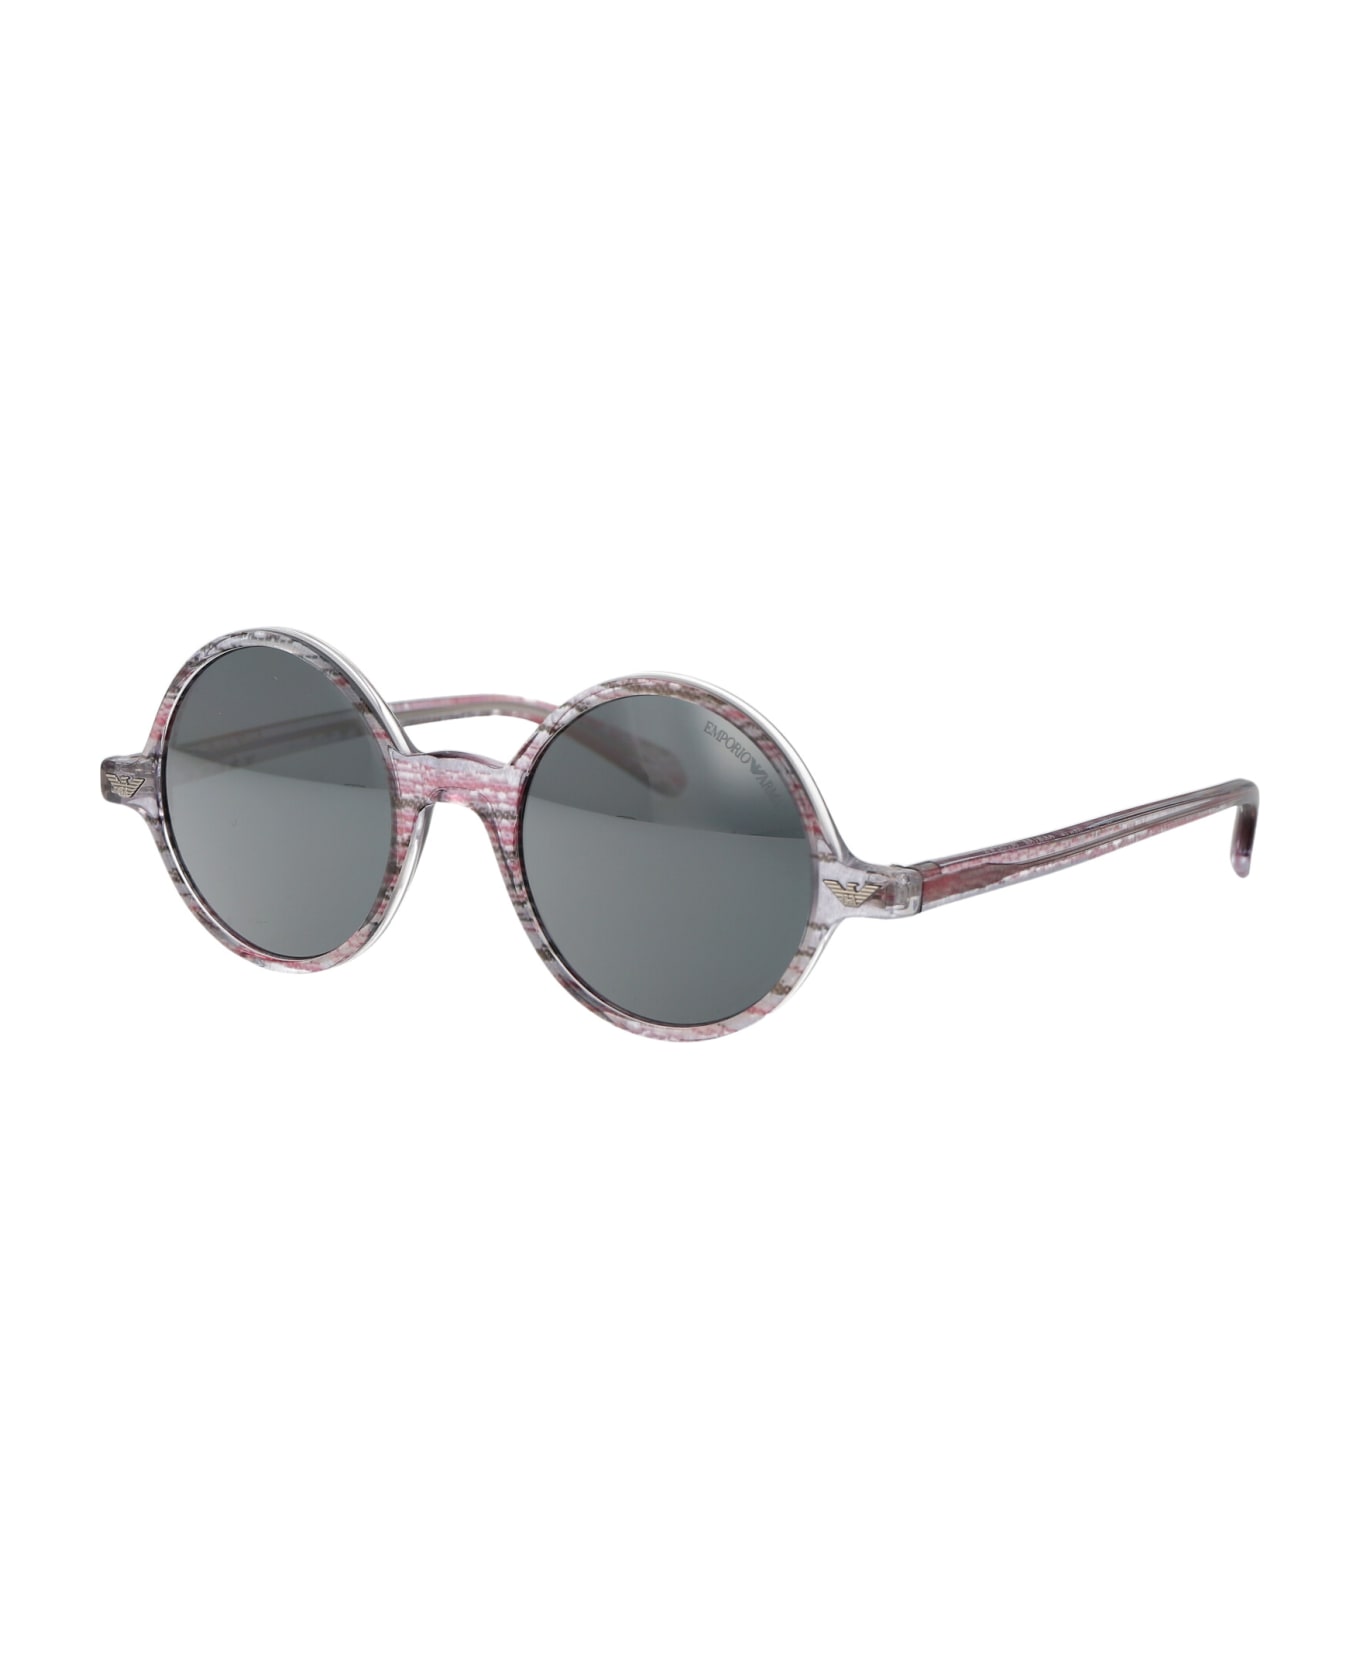 Emporio Armani 0ea 501m Sunglasses - 60196G Crystal Pink Pattern